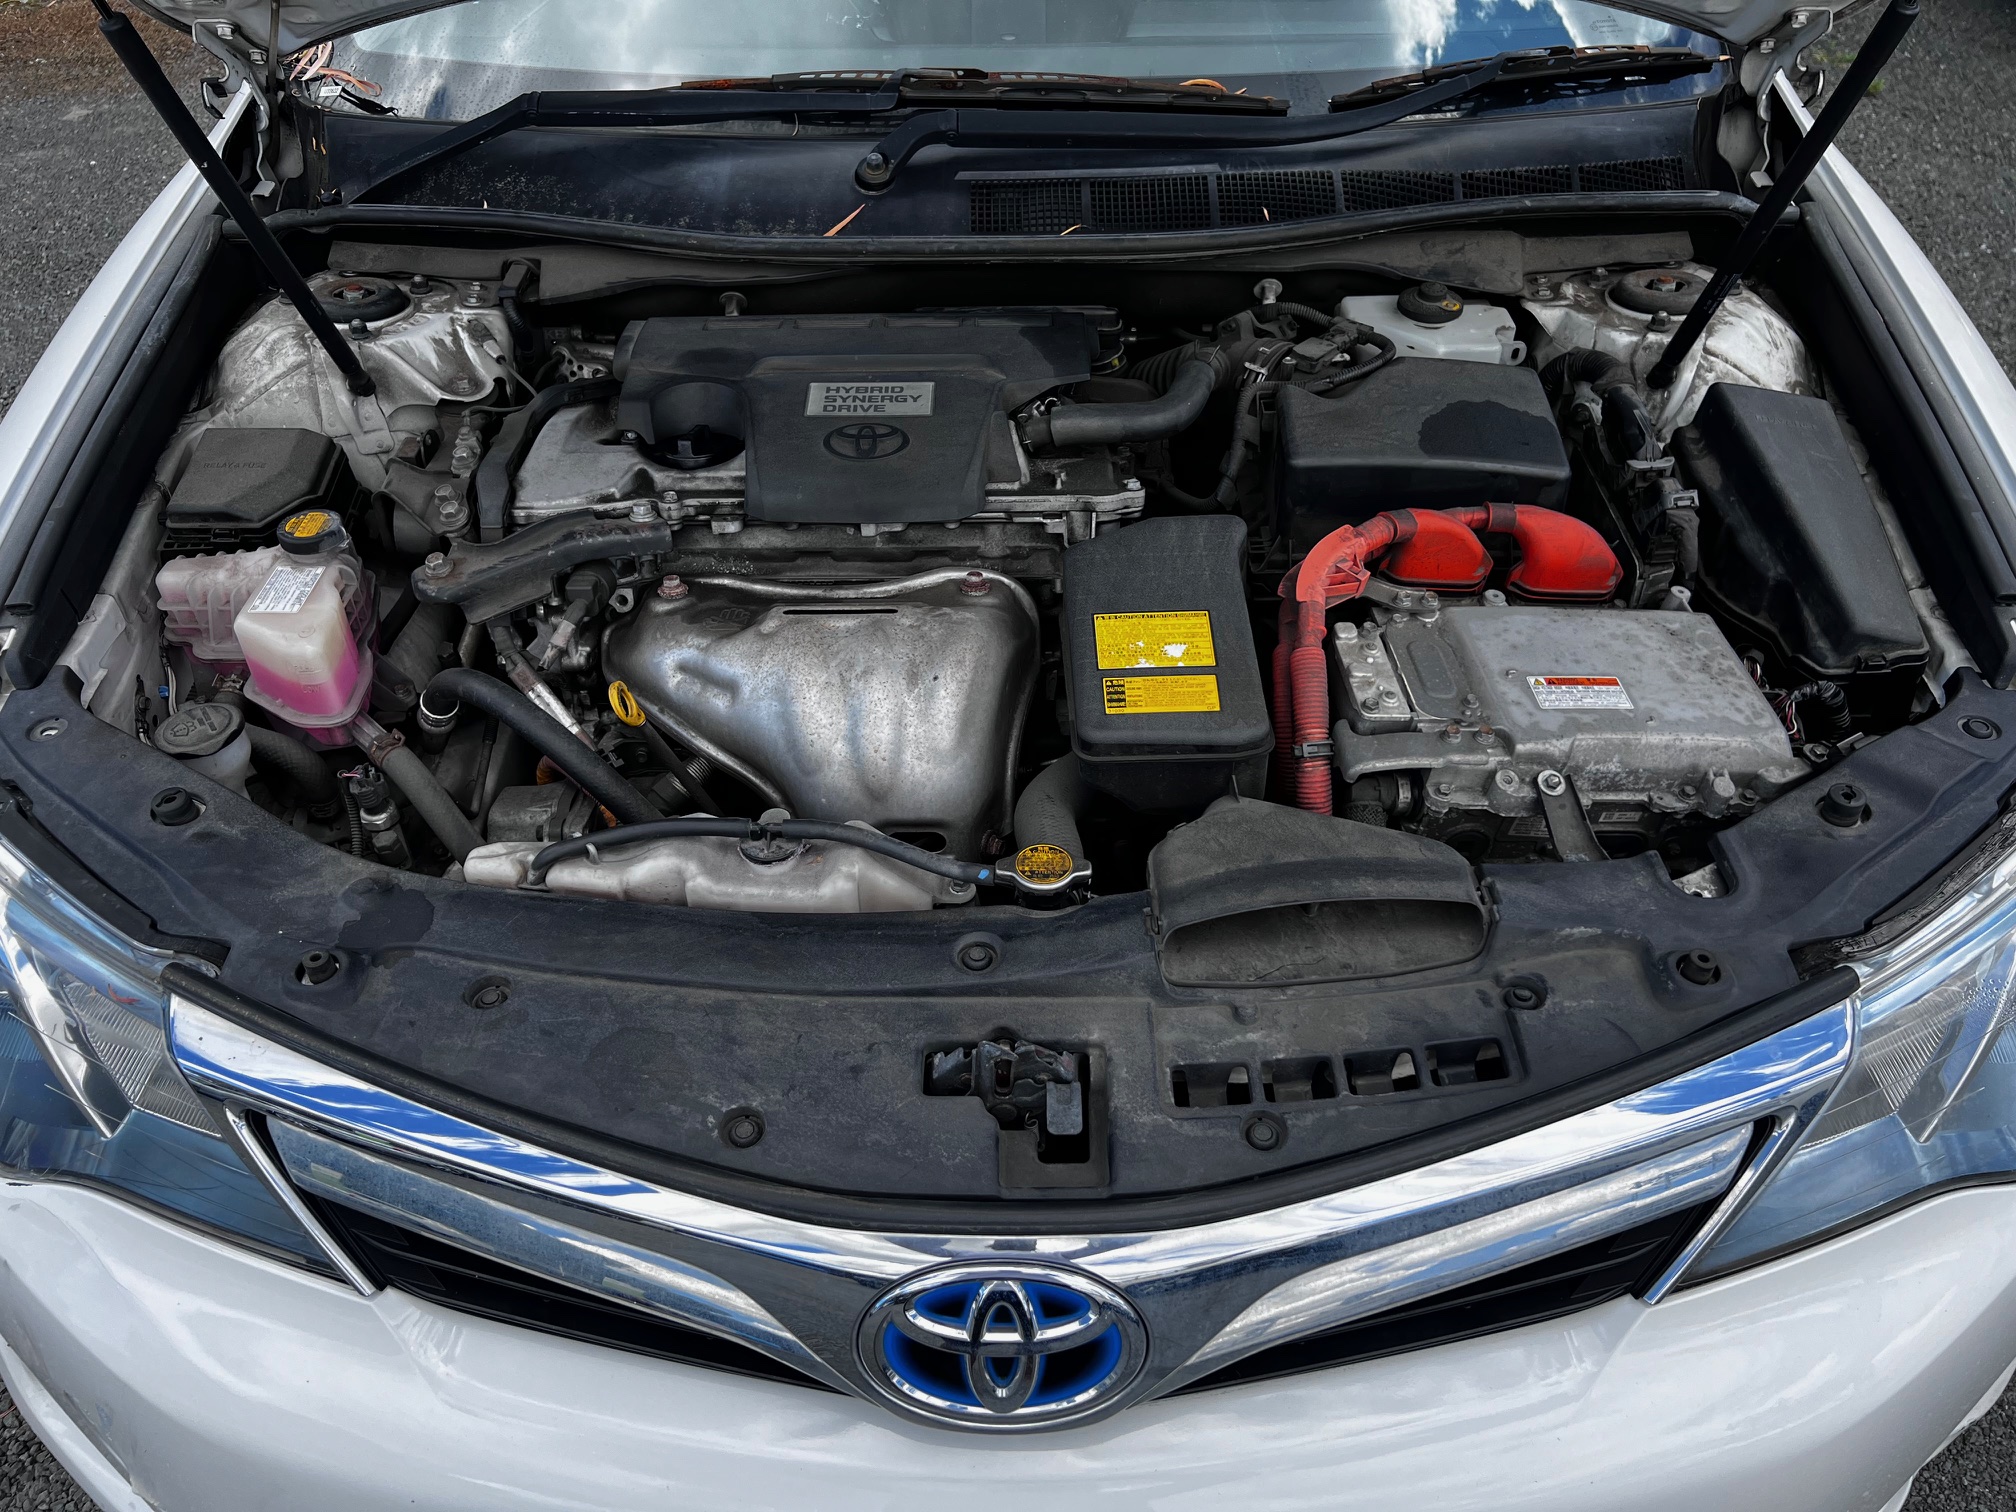 Toyota Camry 2012 Image 7